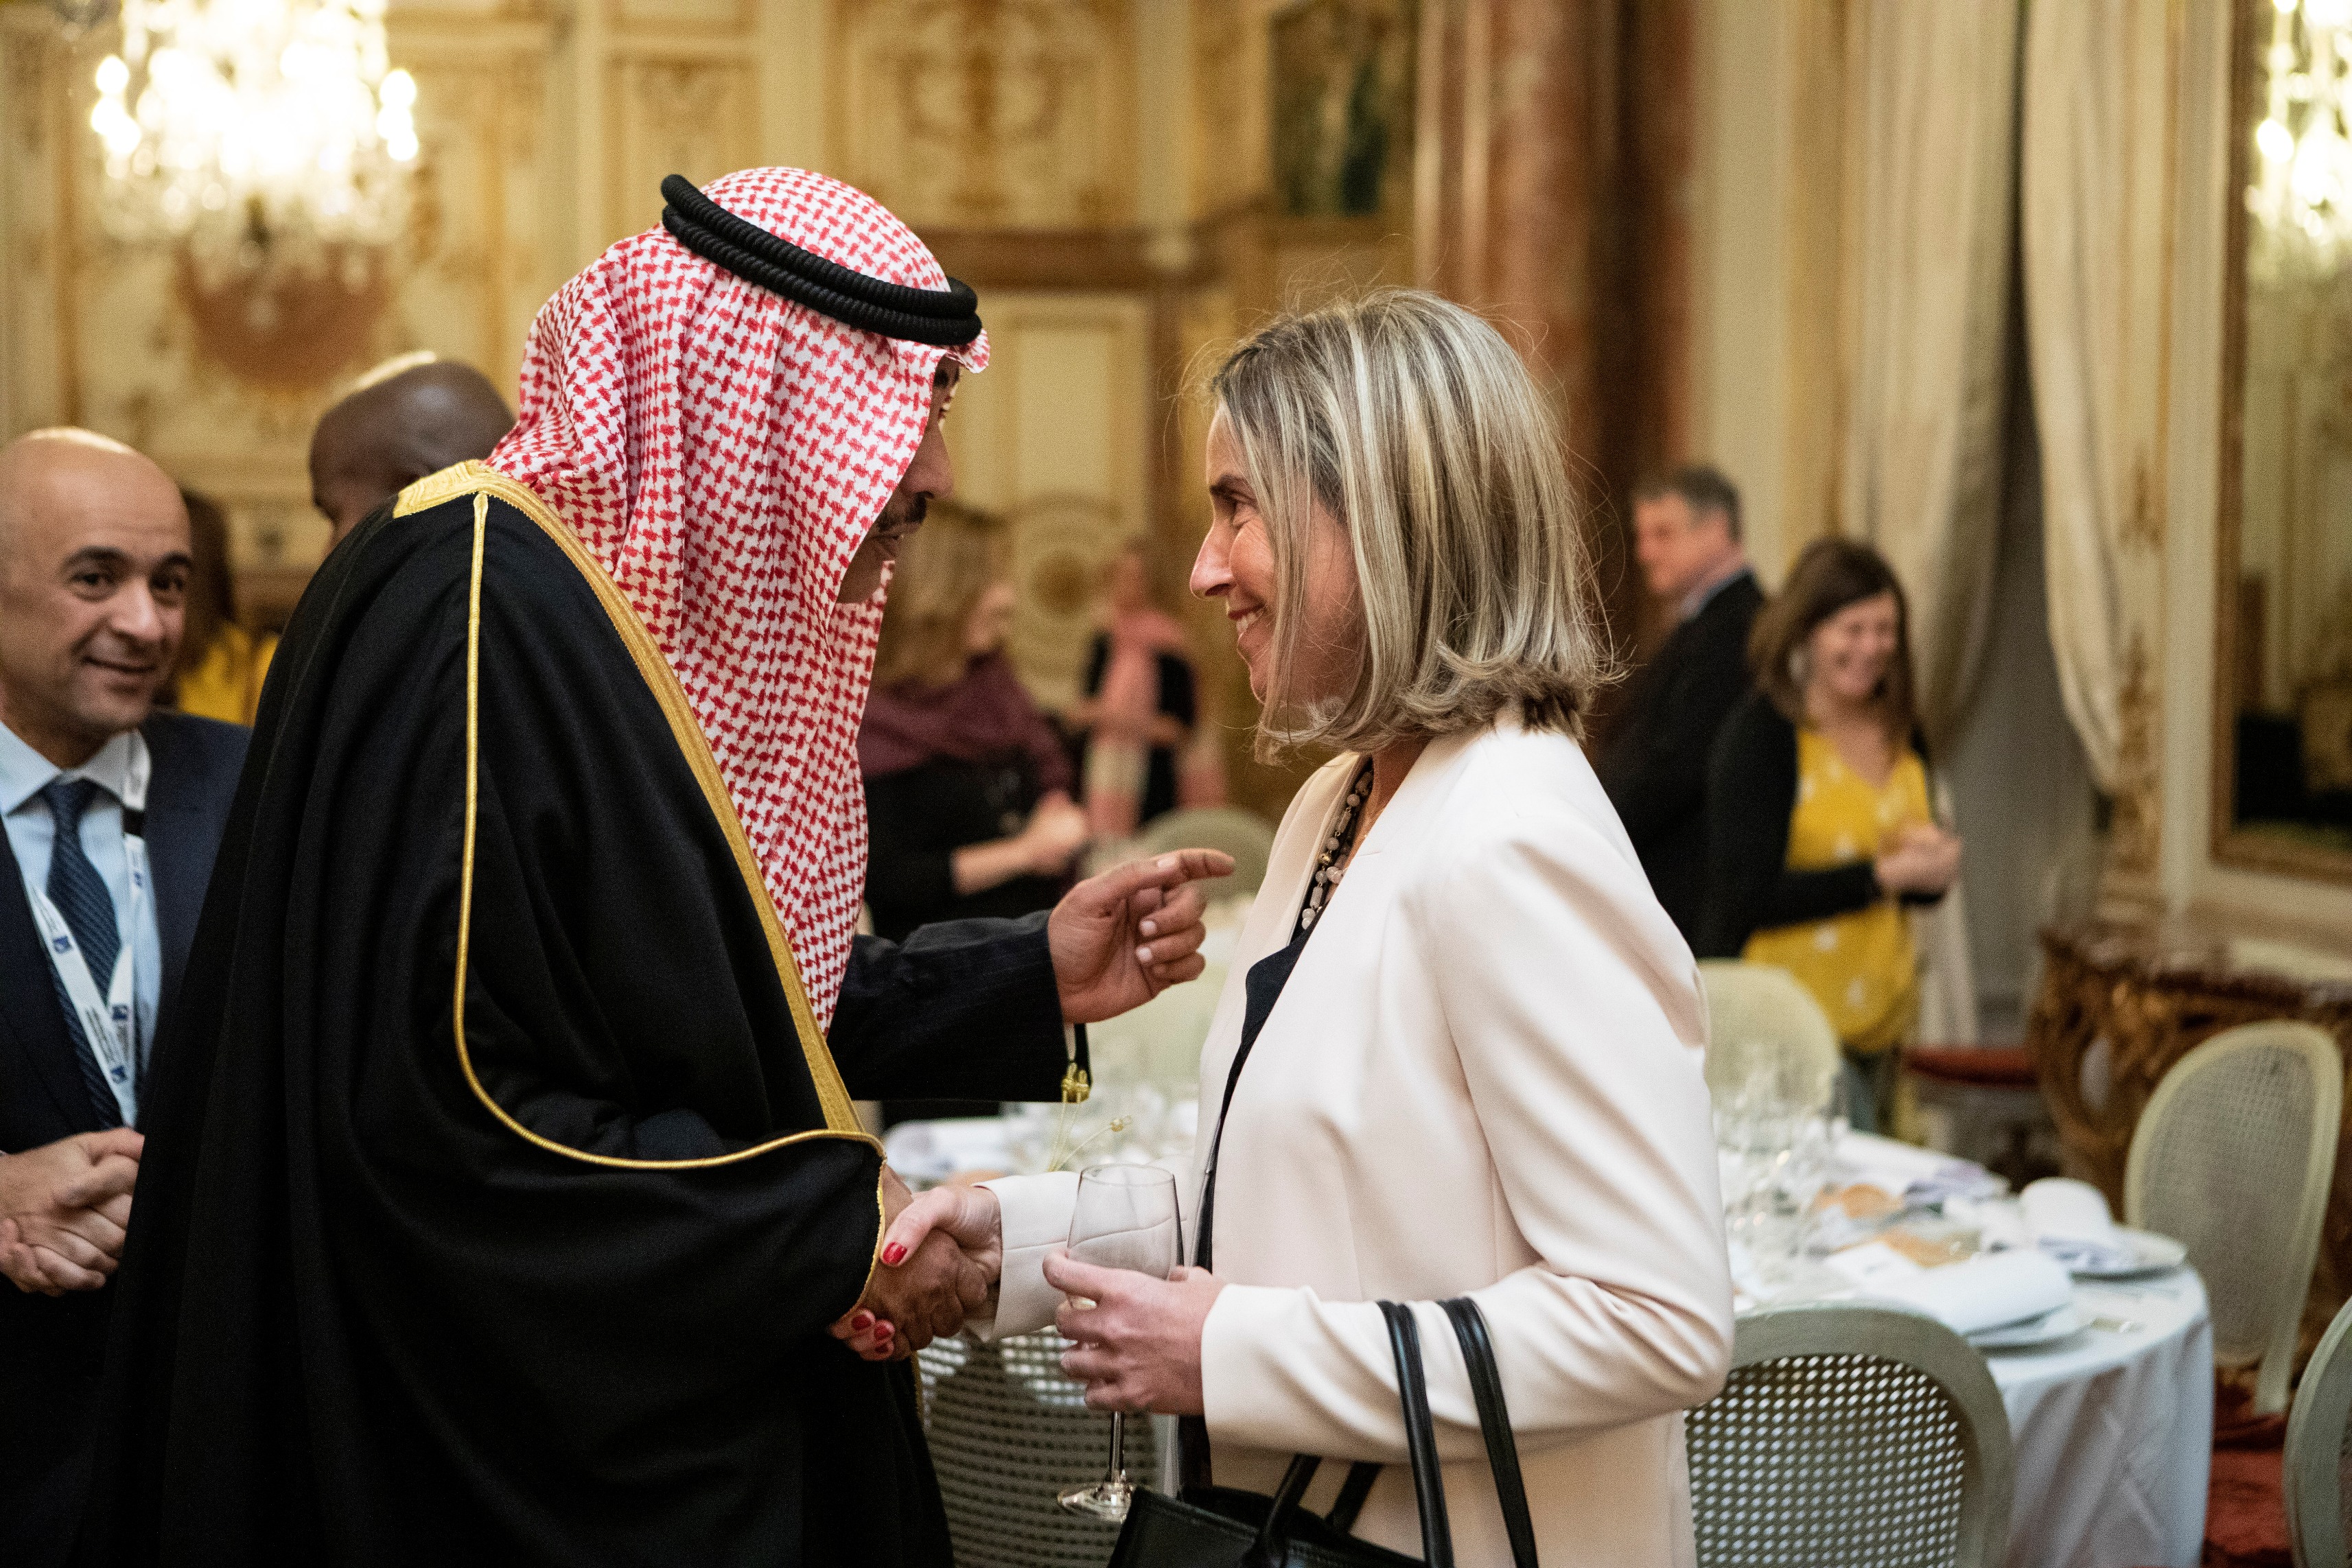 FM  Sheikh Sabah Al-Khaled Al-Hamad Al-Sabah  with EU High Representative  Federica Mogherini at the dinner (Photo by European Commission